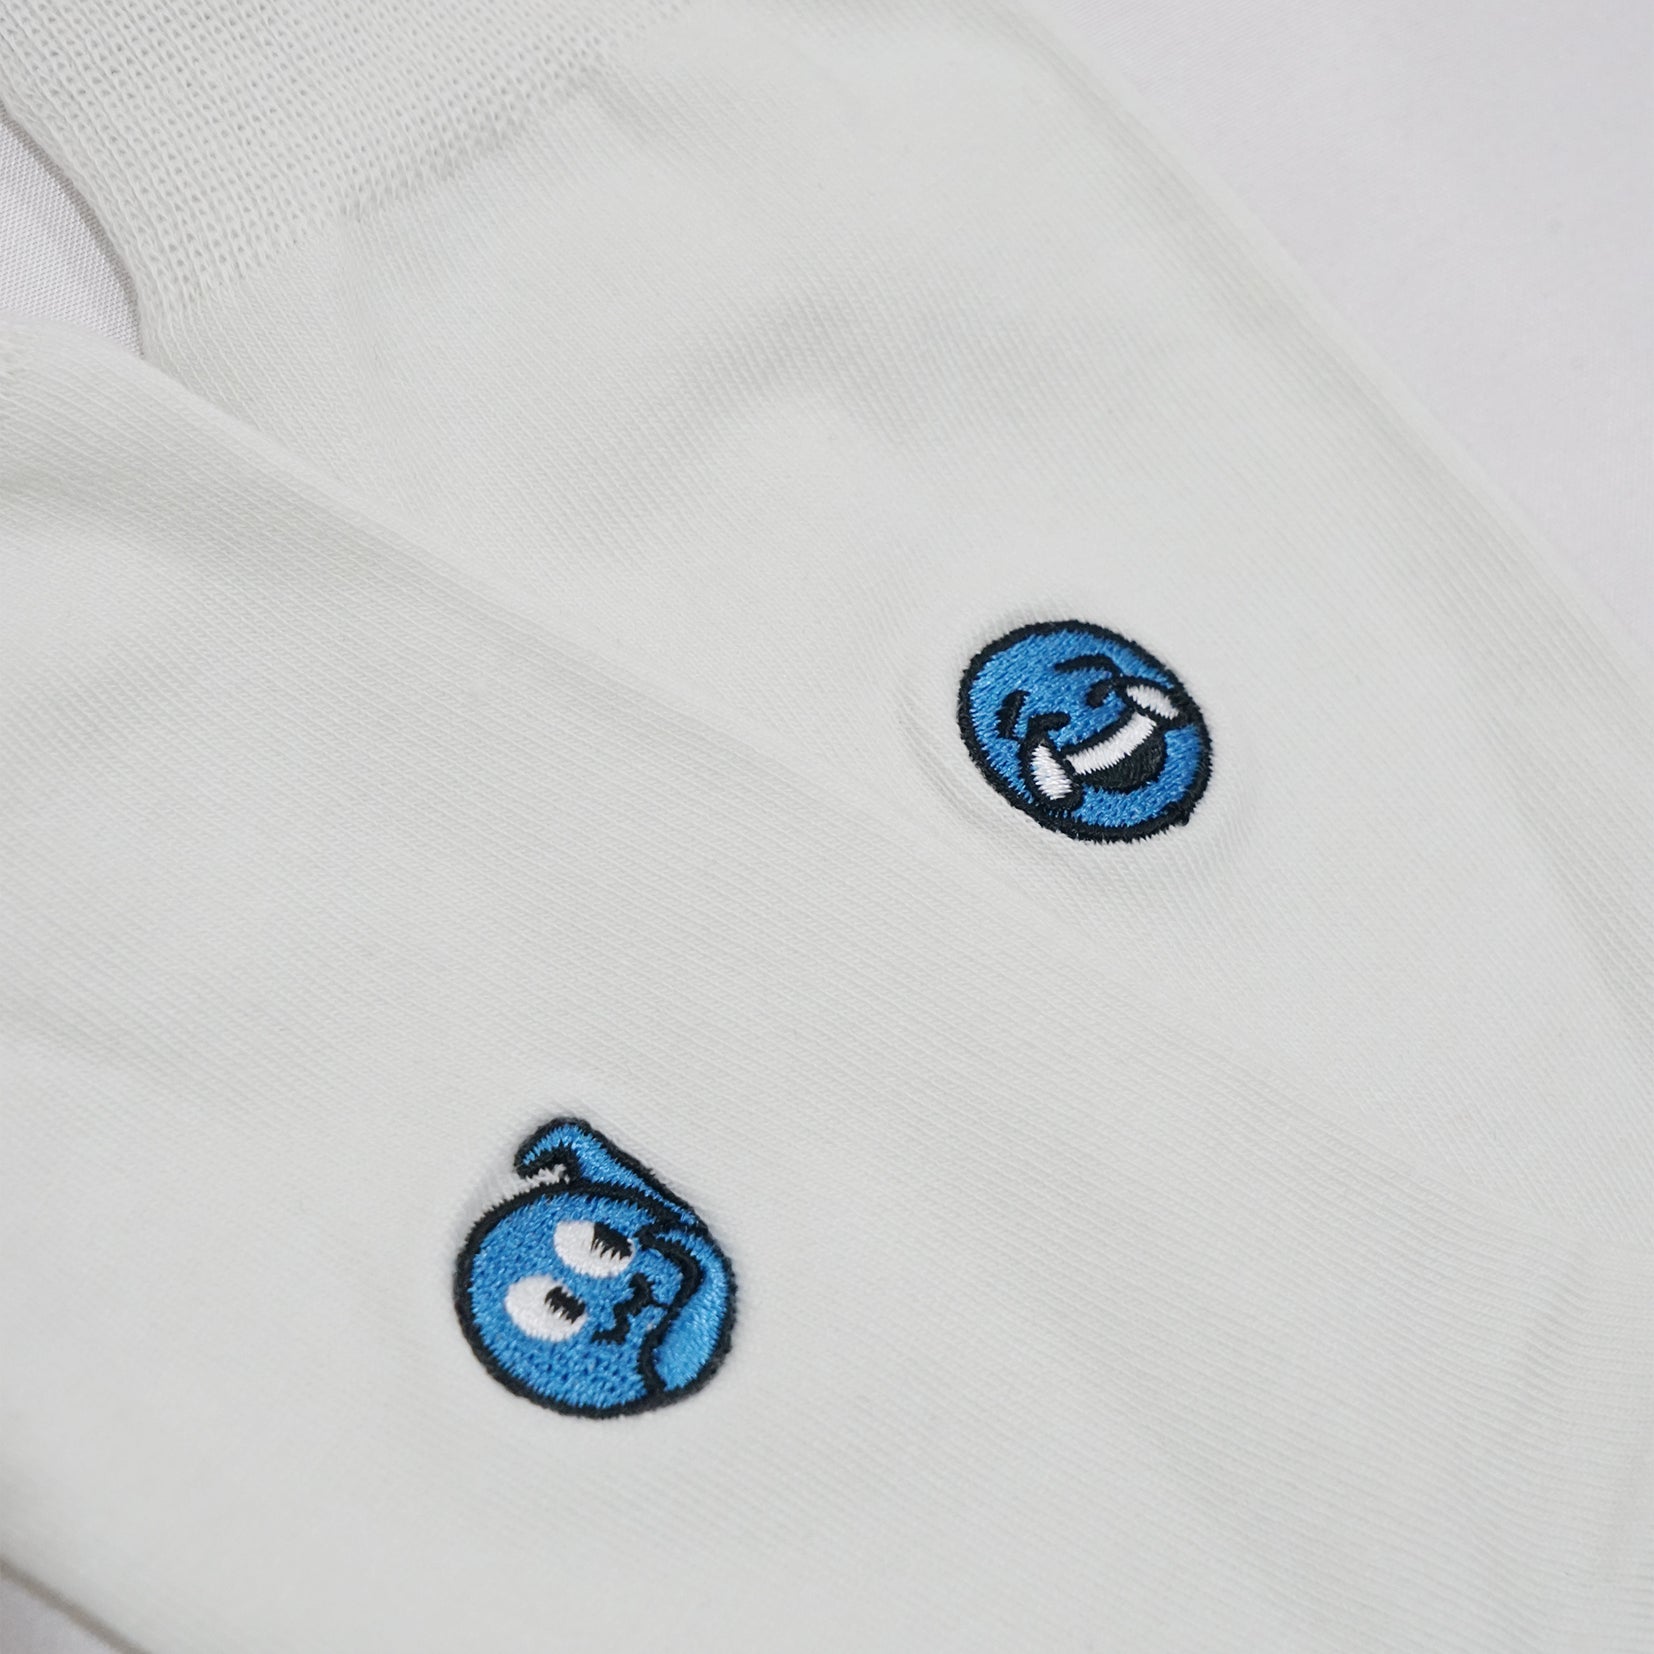 Blue emoji mid-calf sock in white